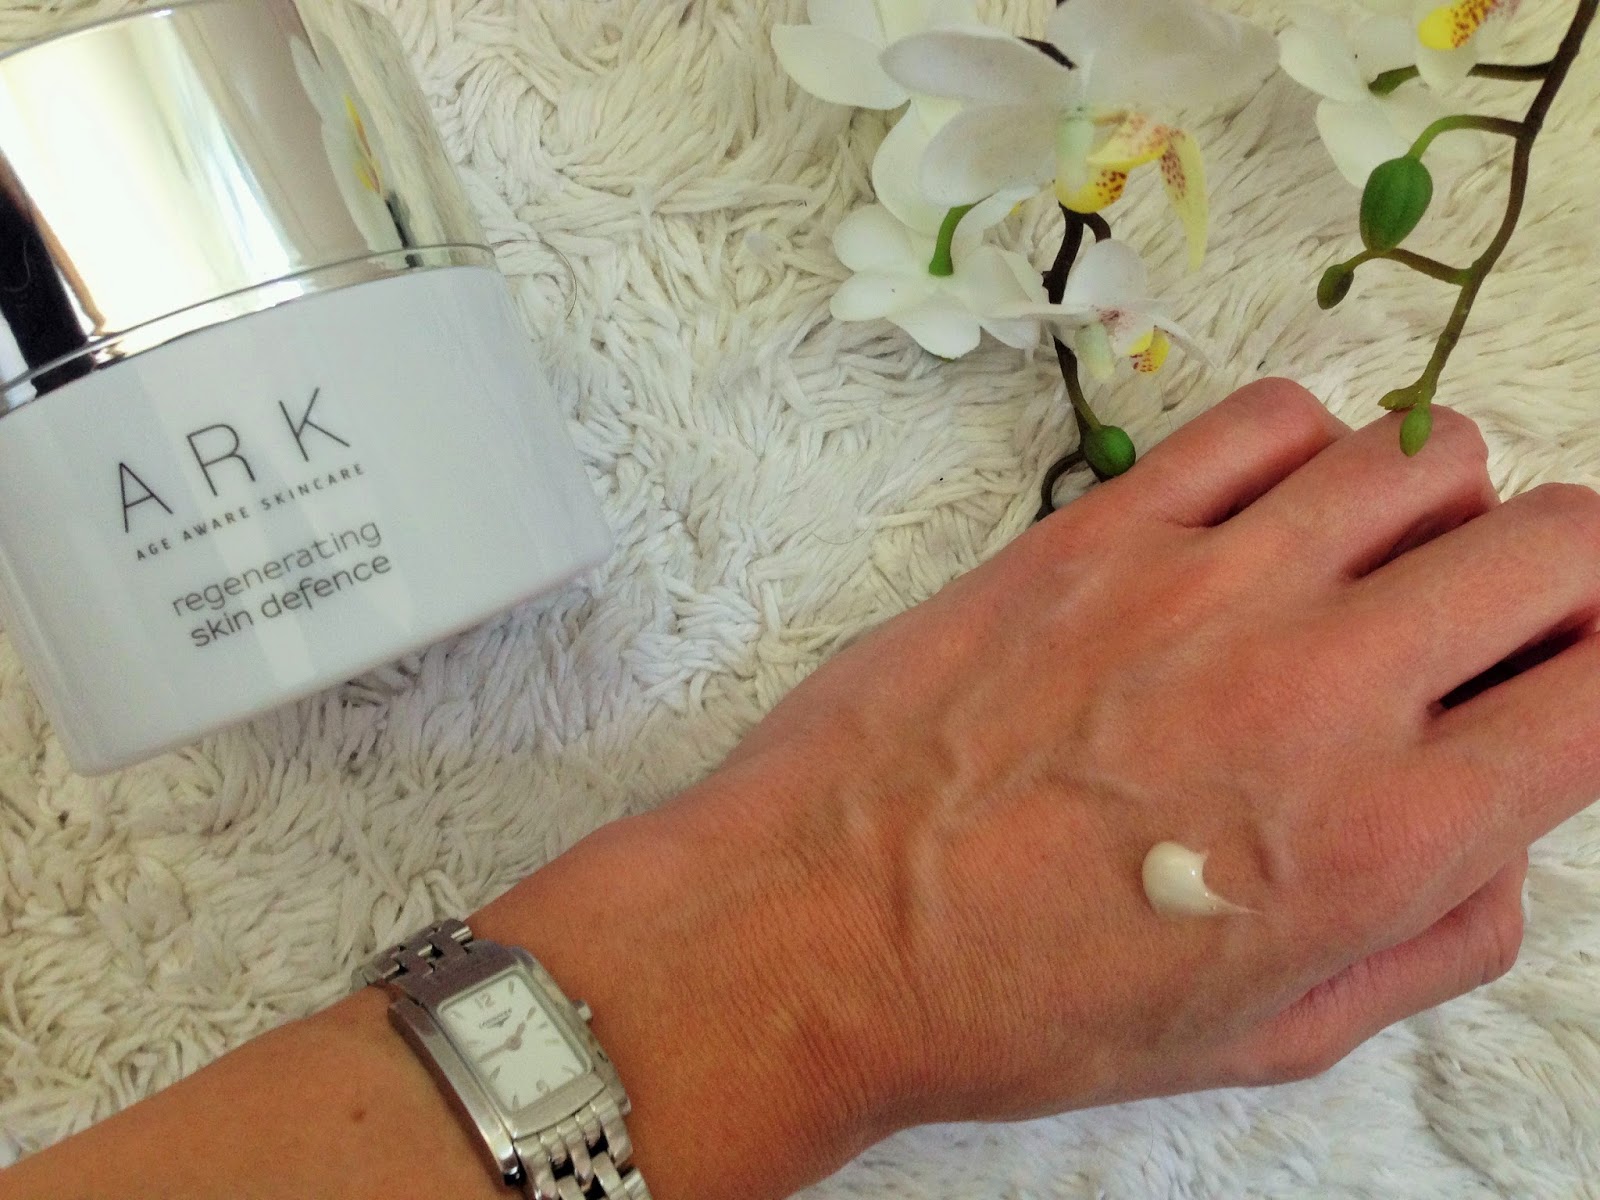 Ark Skincare Regenerating Skin Defence